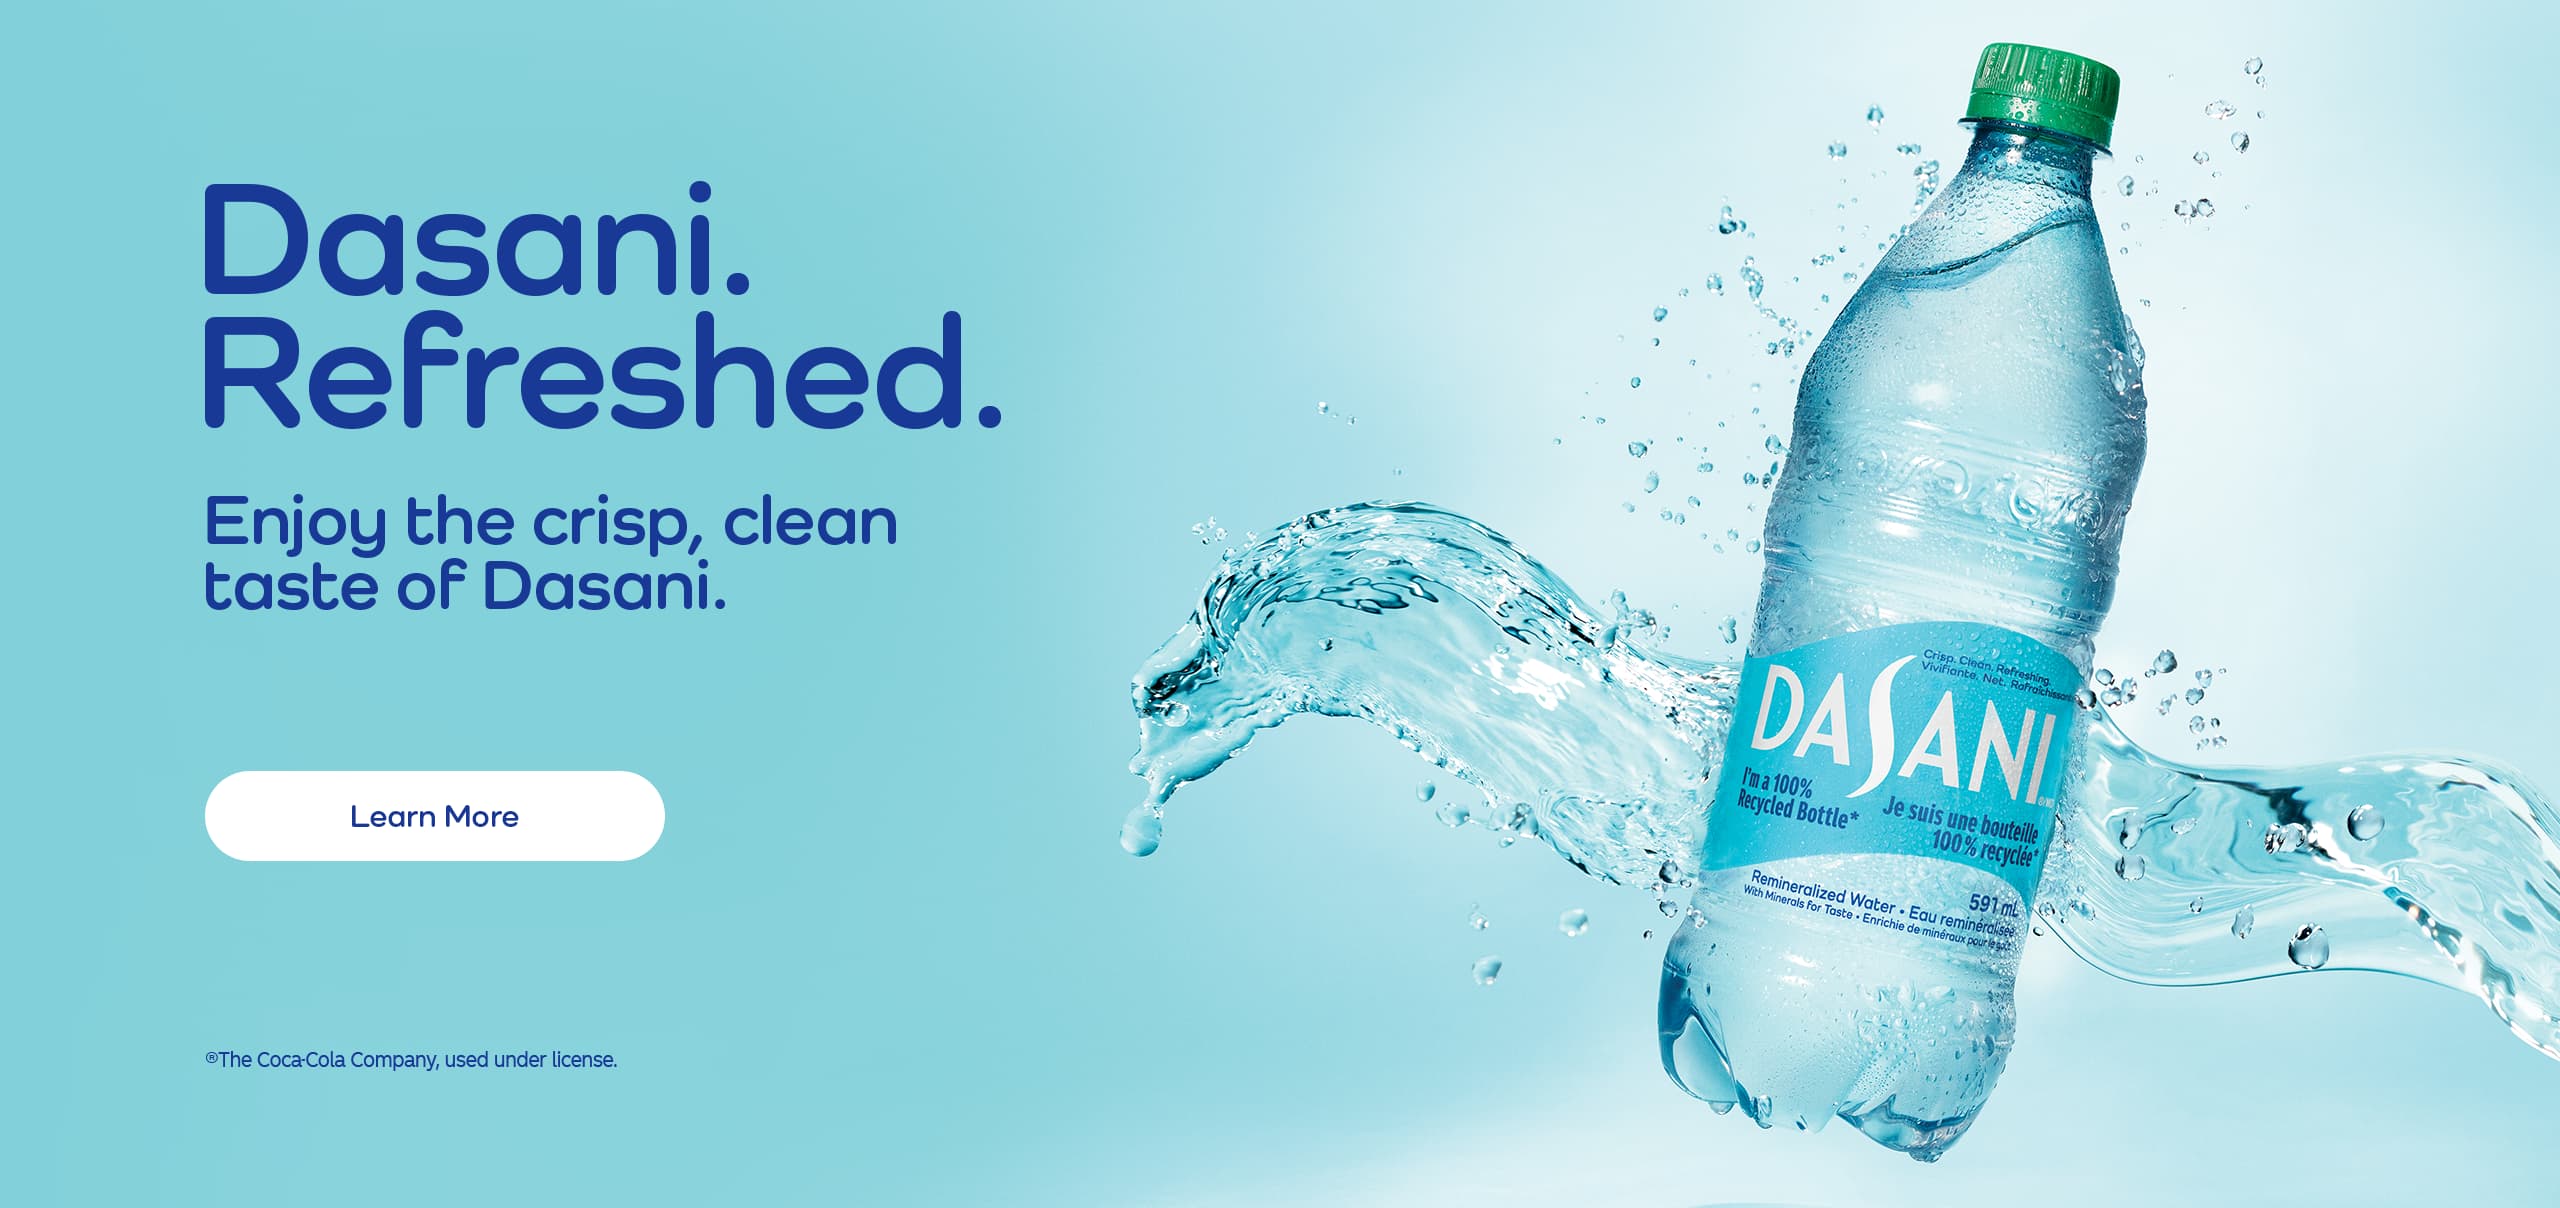 Dasani. Refreshed. Enjoy the crisp, clean taste of Dasani. Learn More.